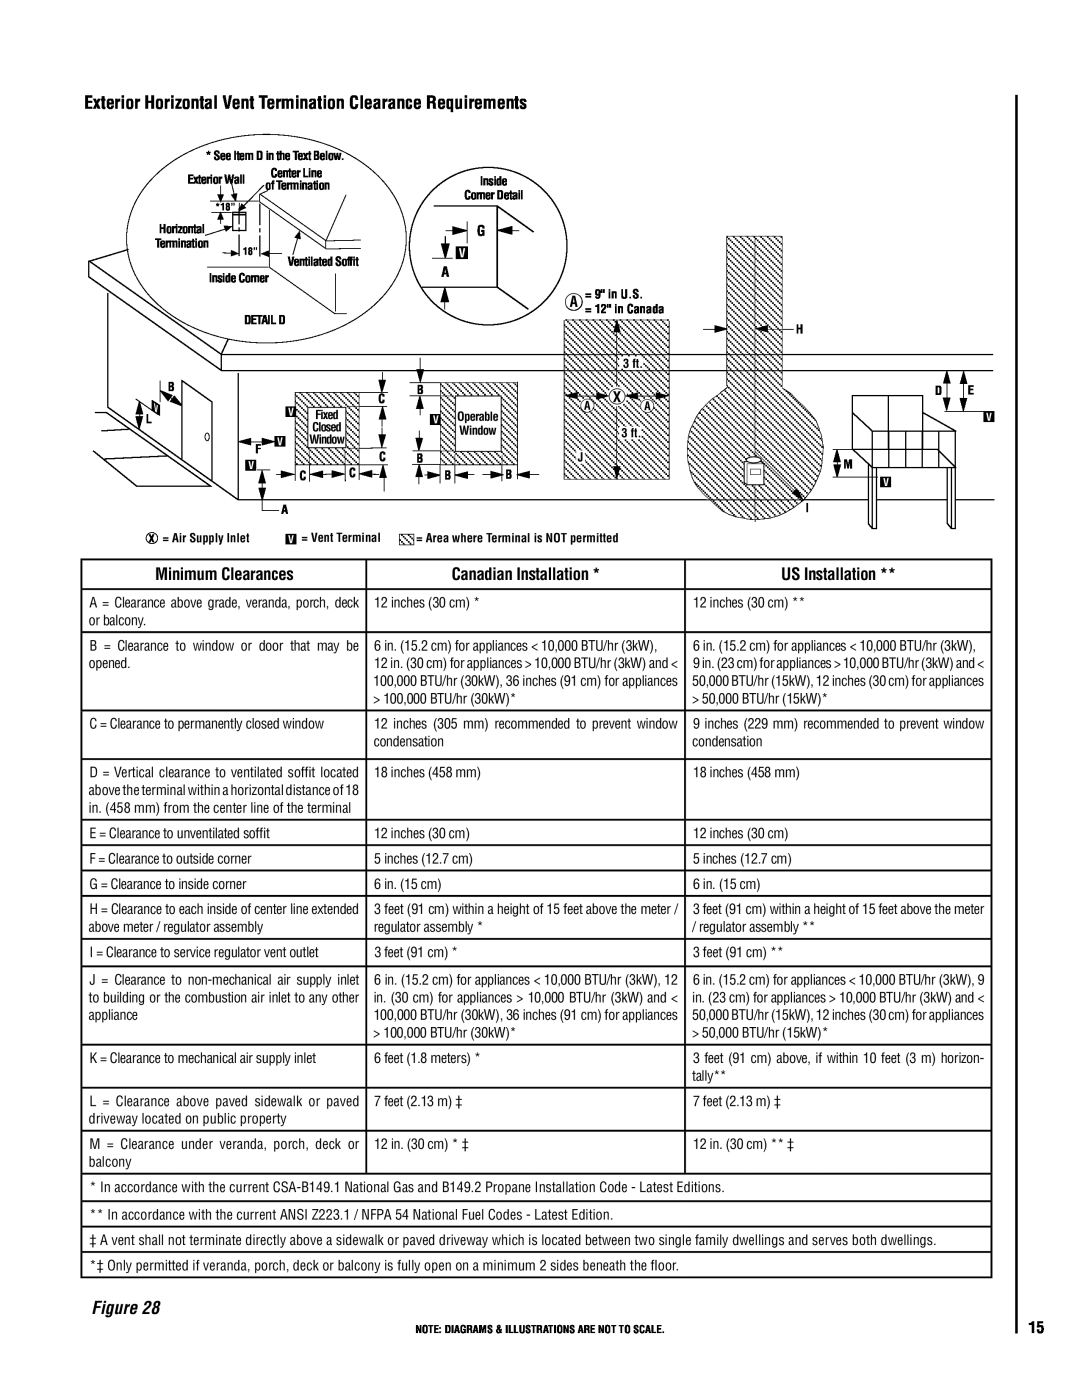 Lennox Hearth VIN operation manual Minimum Clearances, Canadian Installation, US Installation 